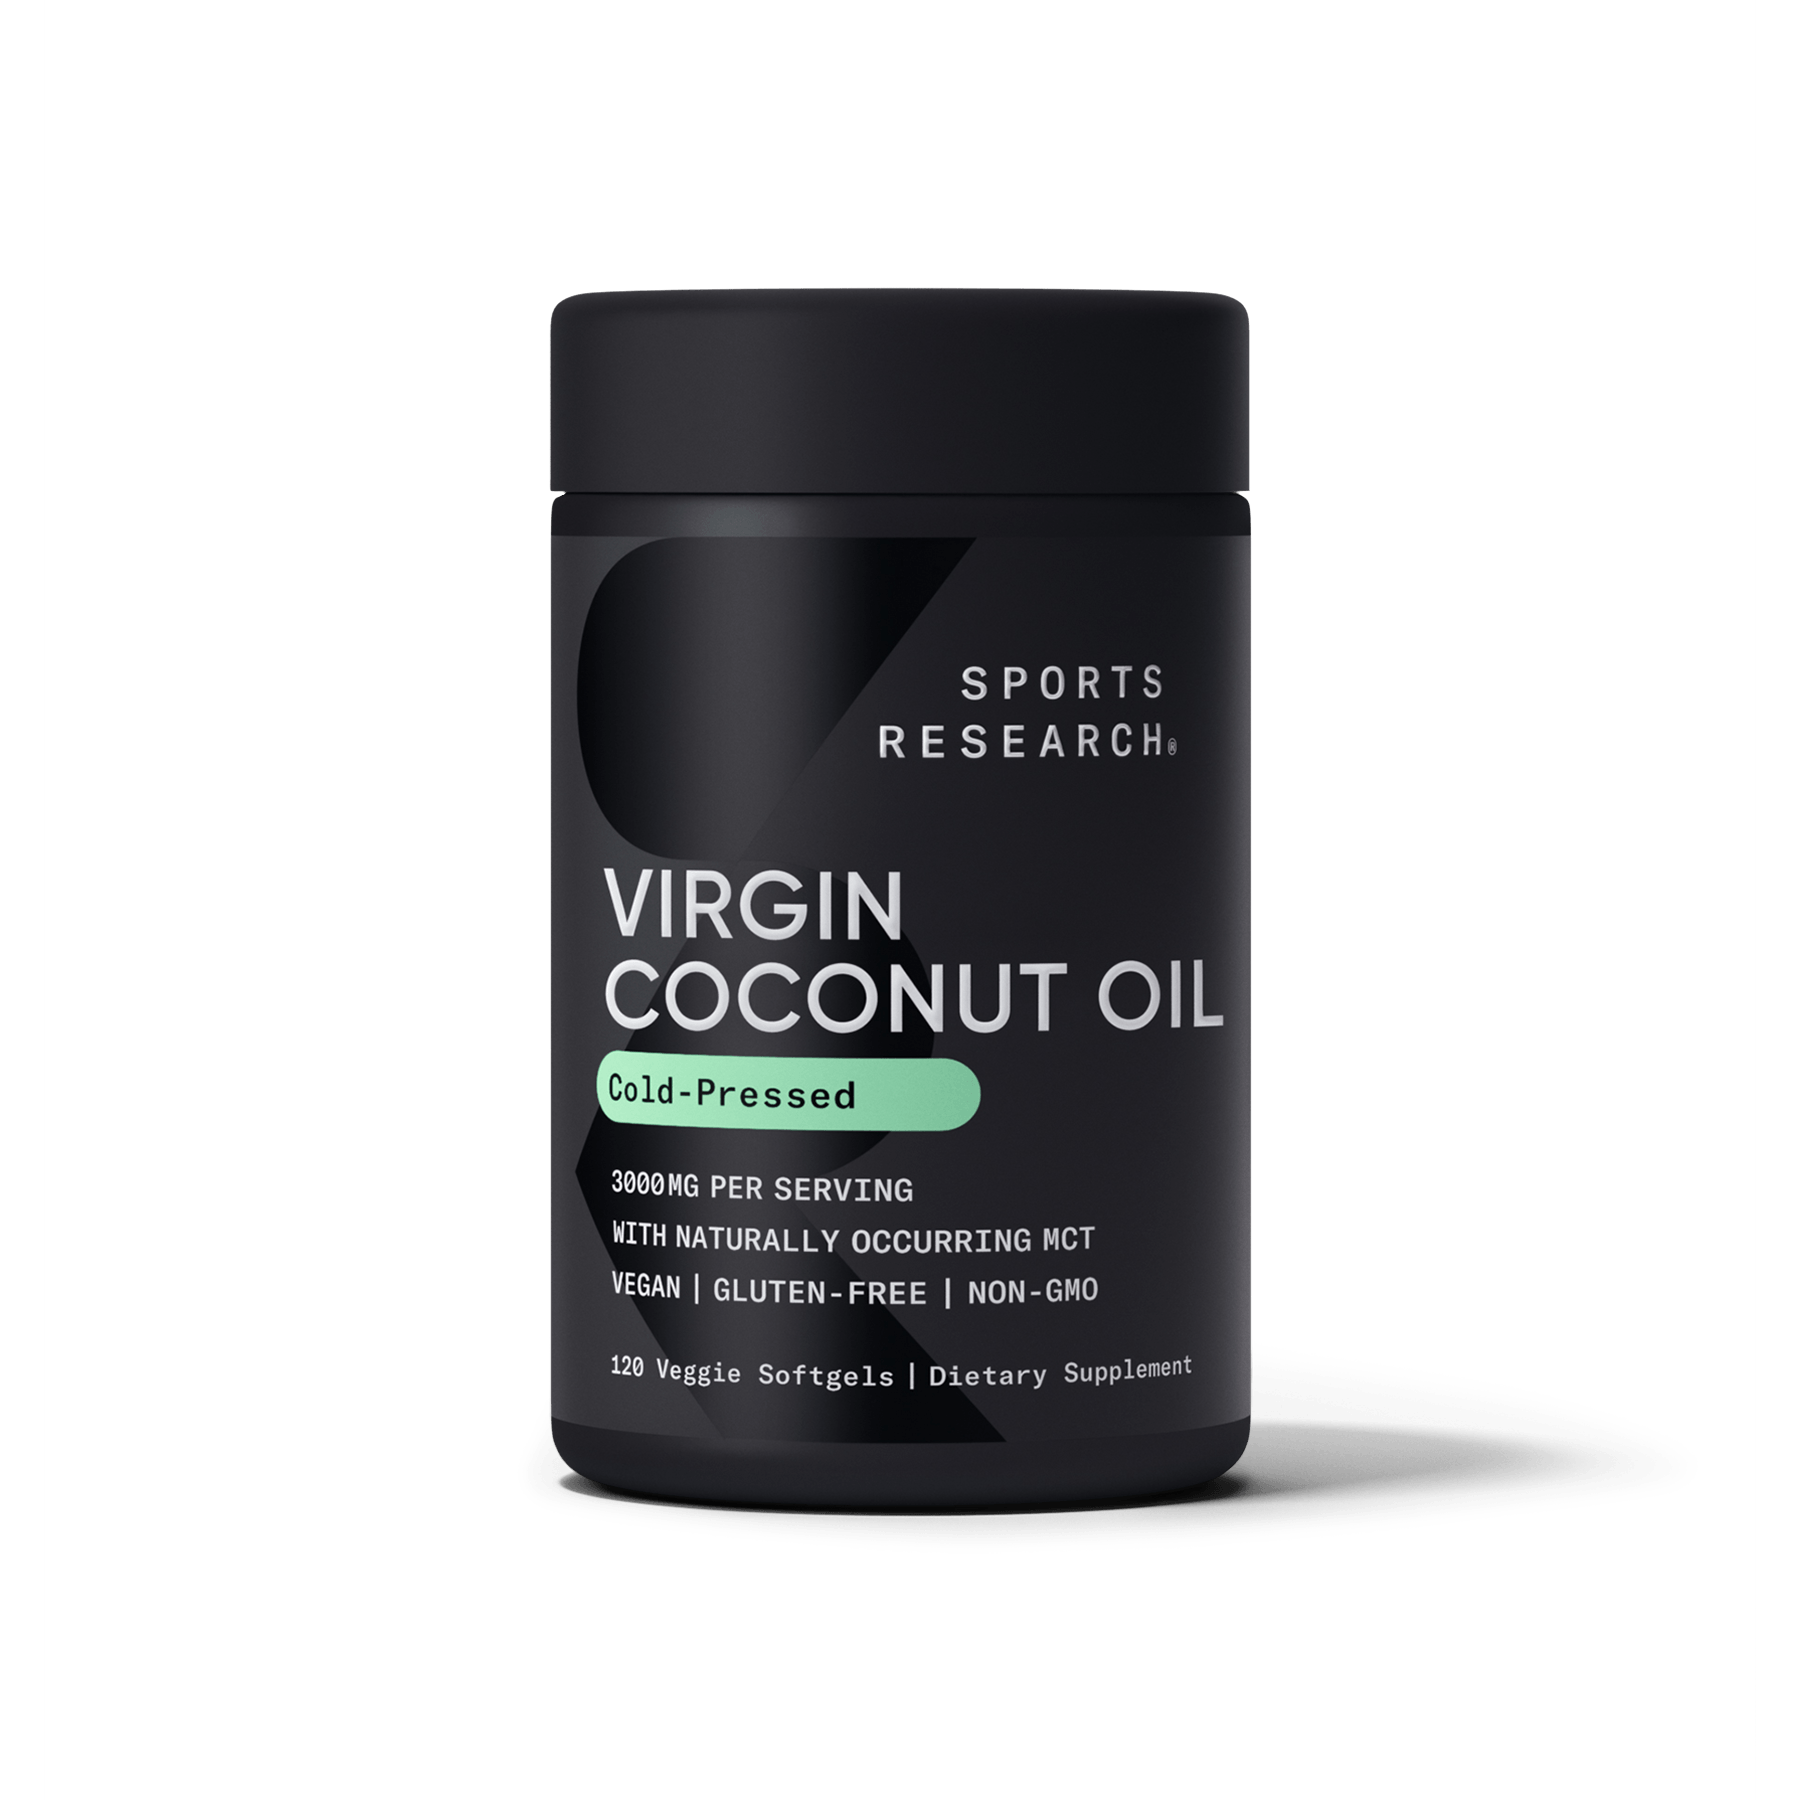 Sports Research Virgin Coconut Oil.